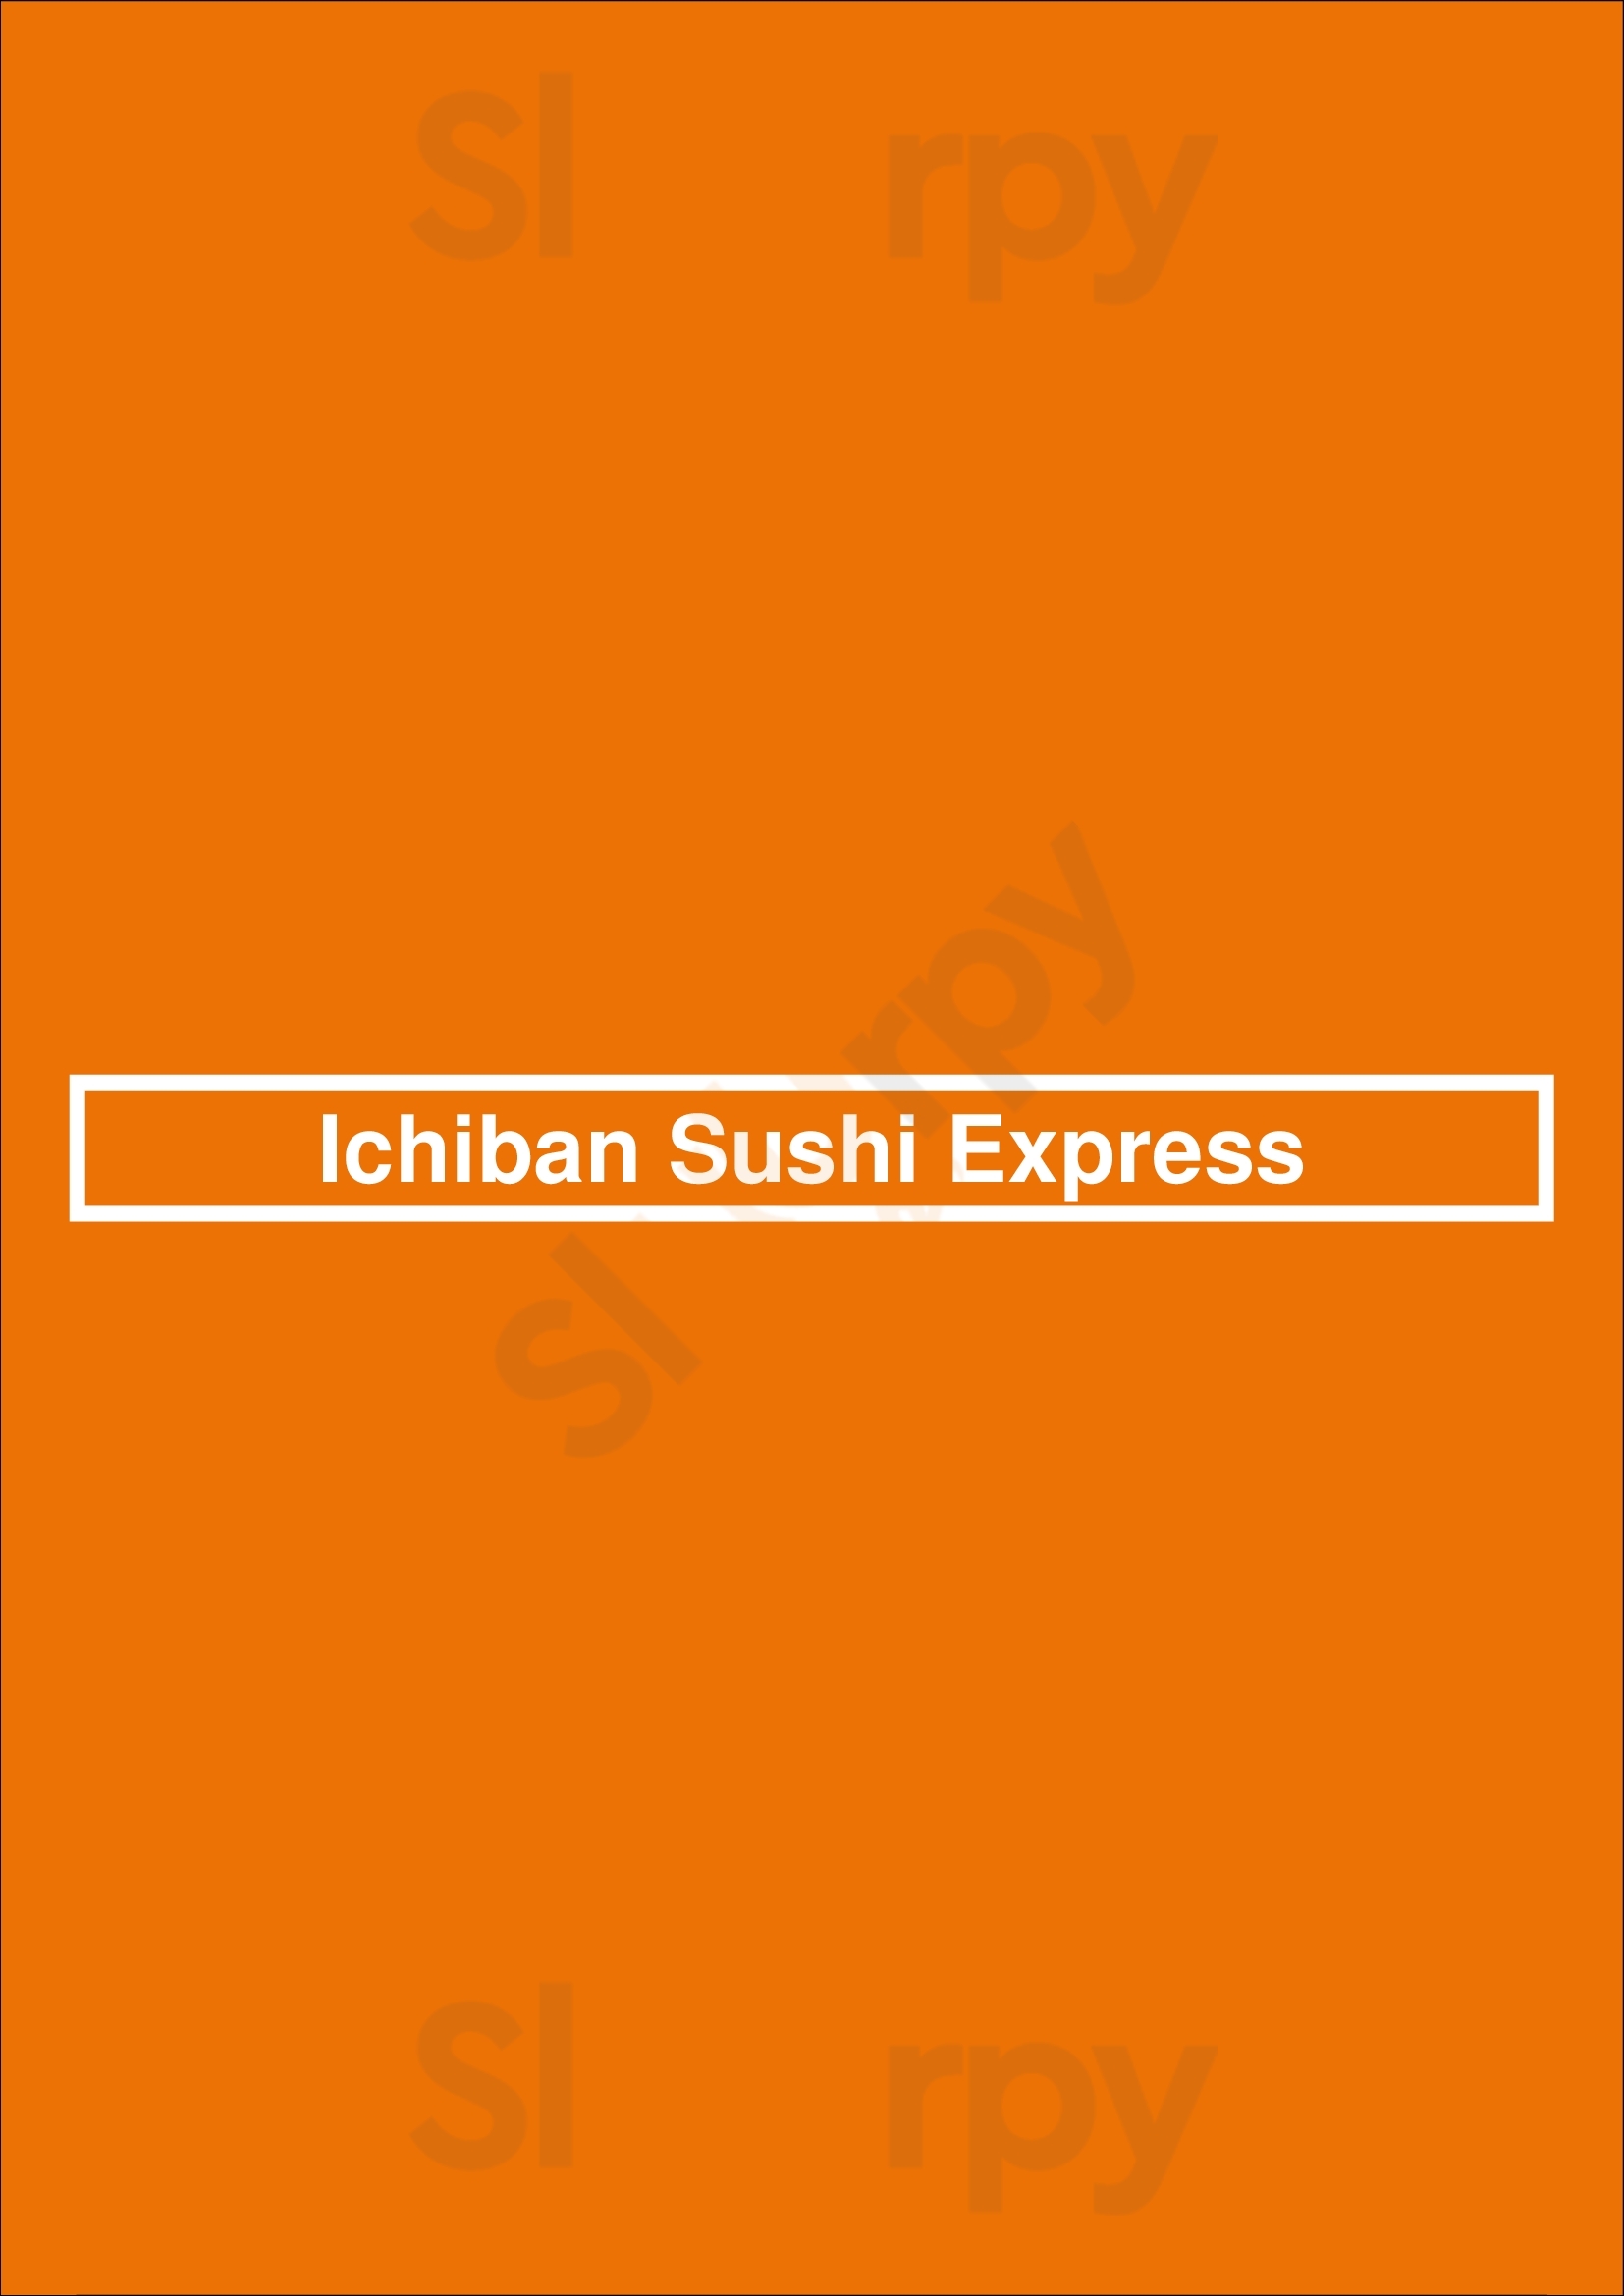 Ichiban Sushi Express Niagara Falls Menu - 1